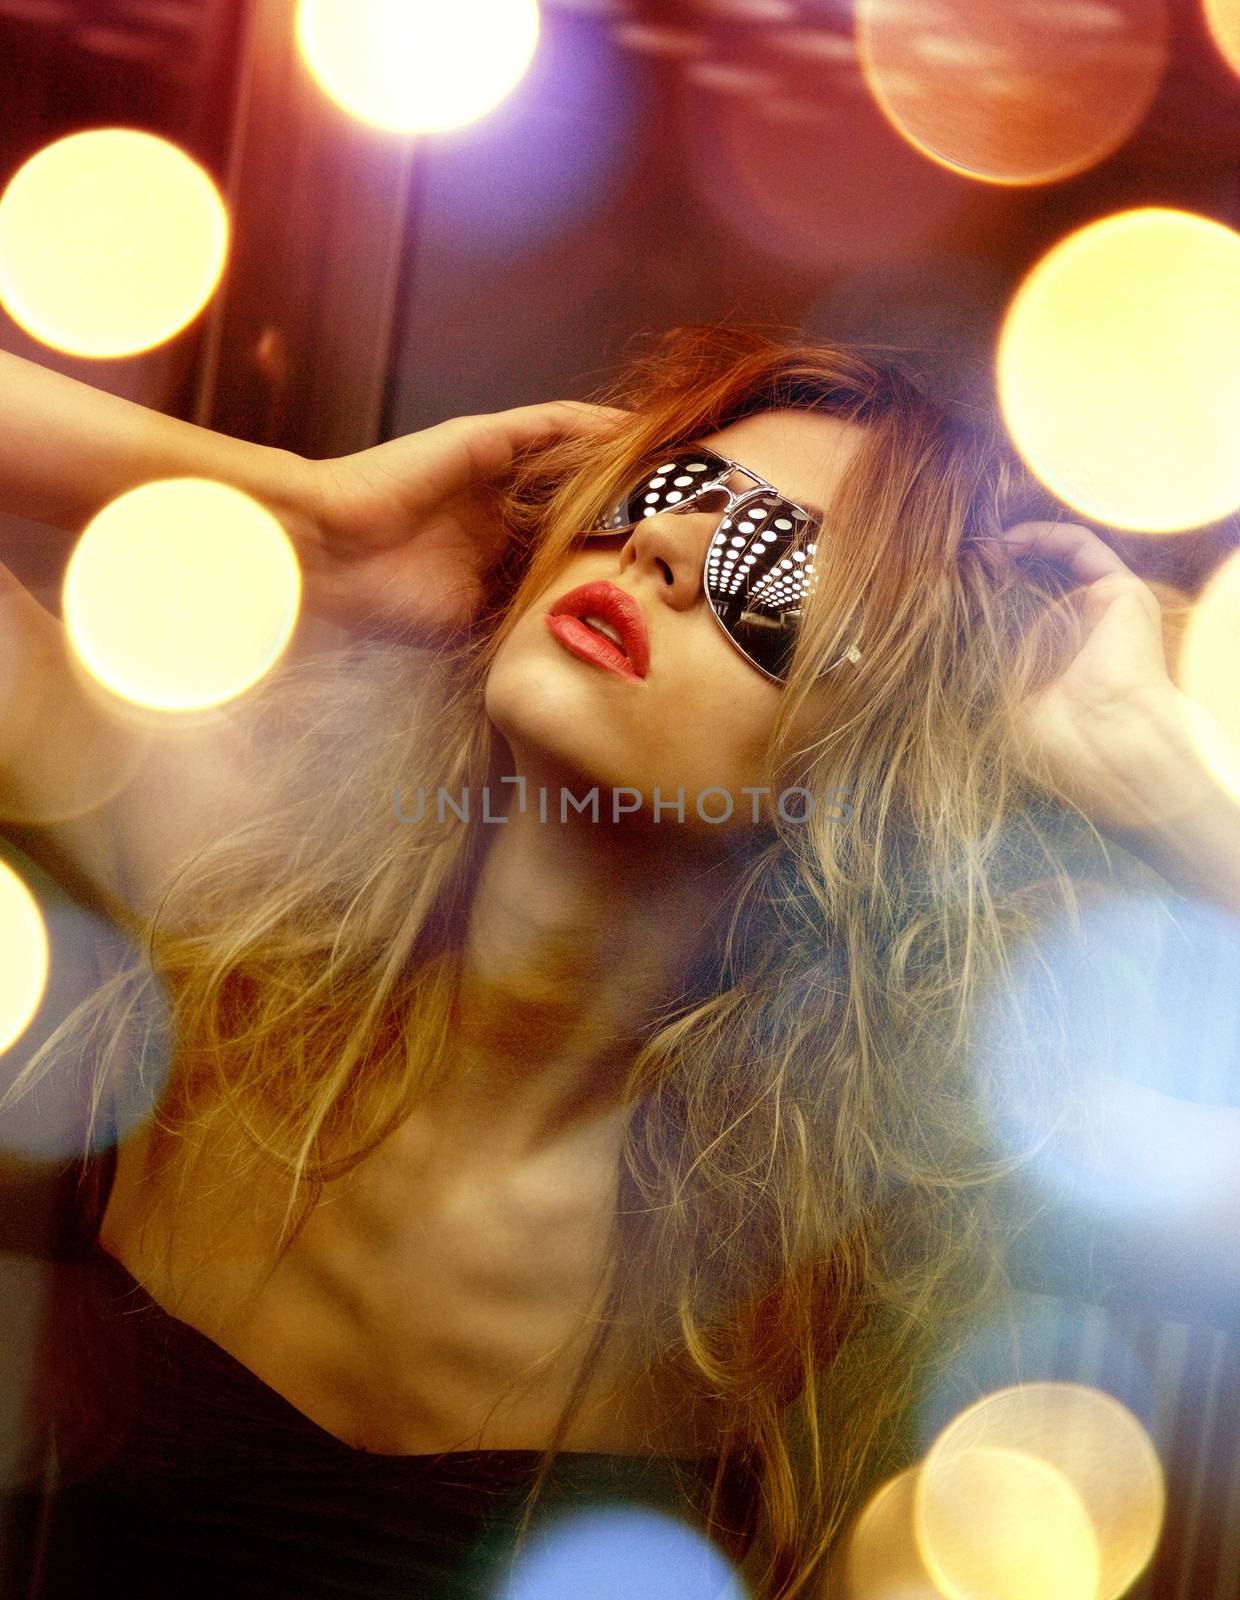 beautiful woman in sunglasses in elevator by dolgachov